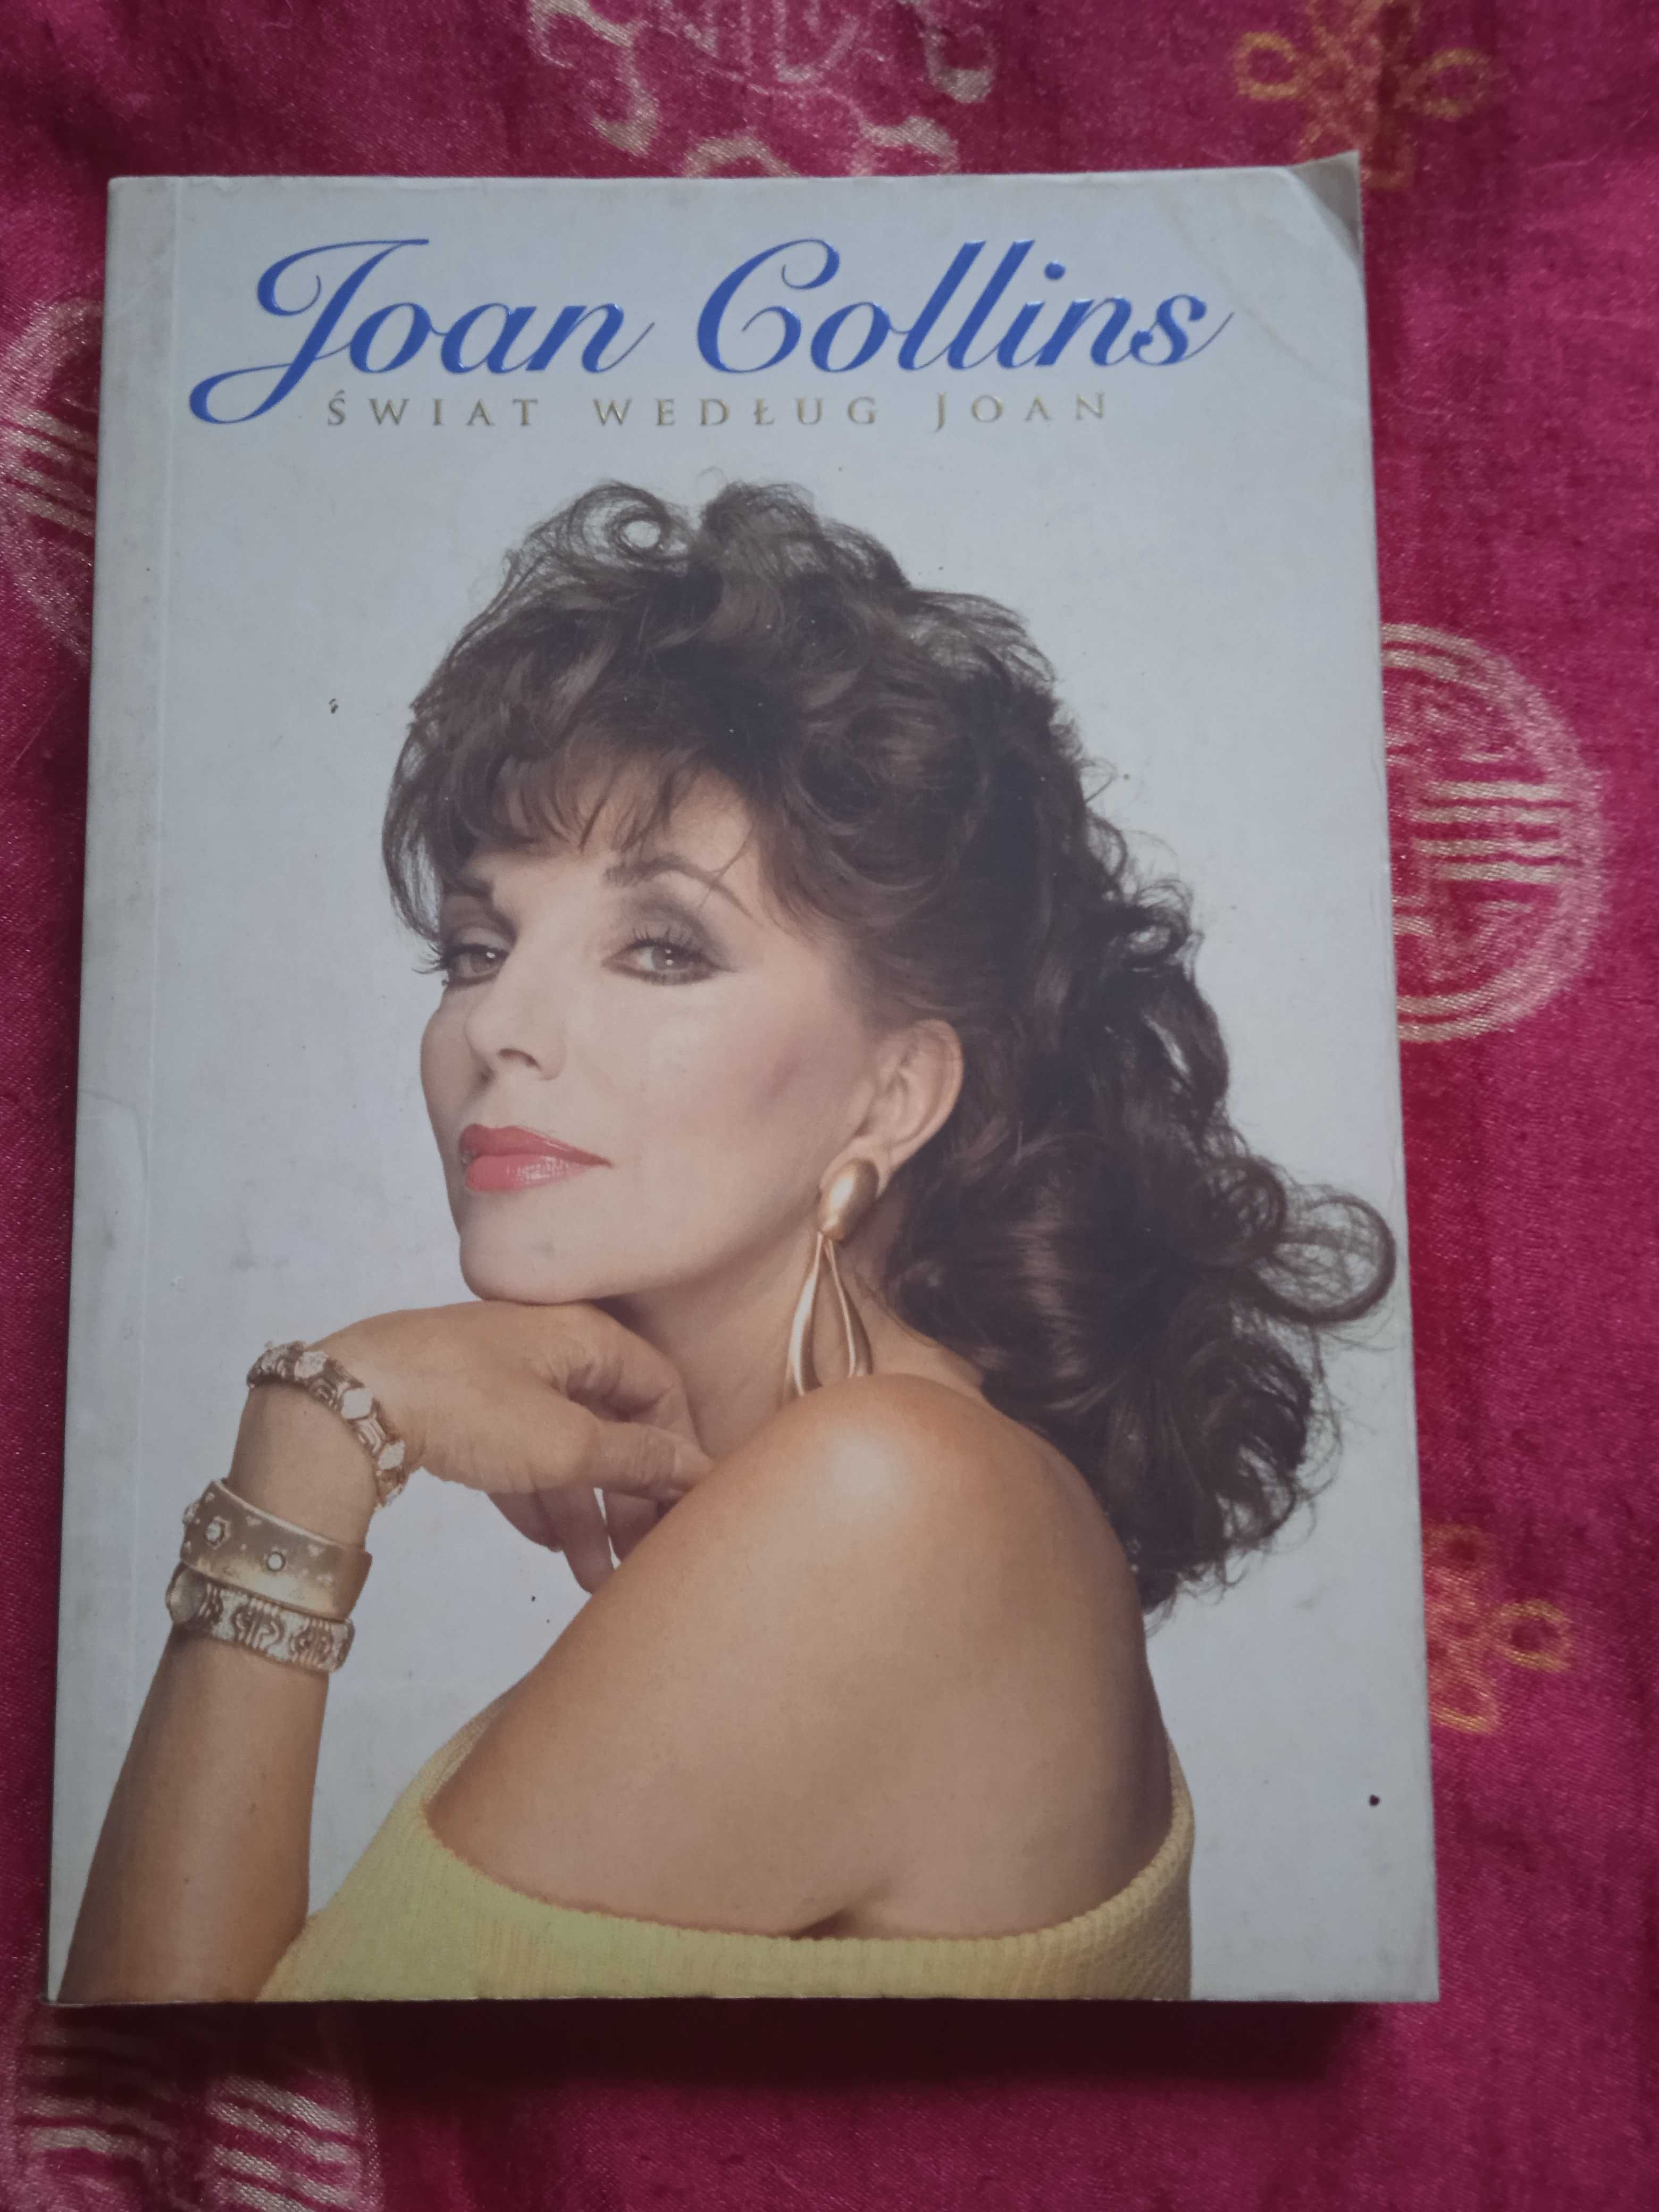 Joan Collins "Świat według Joan"